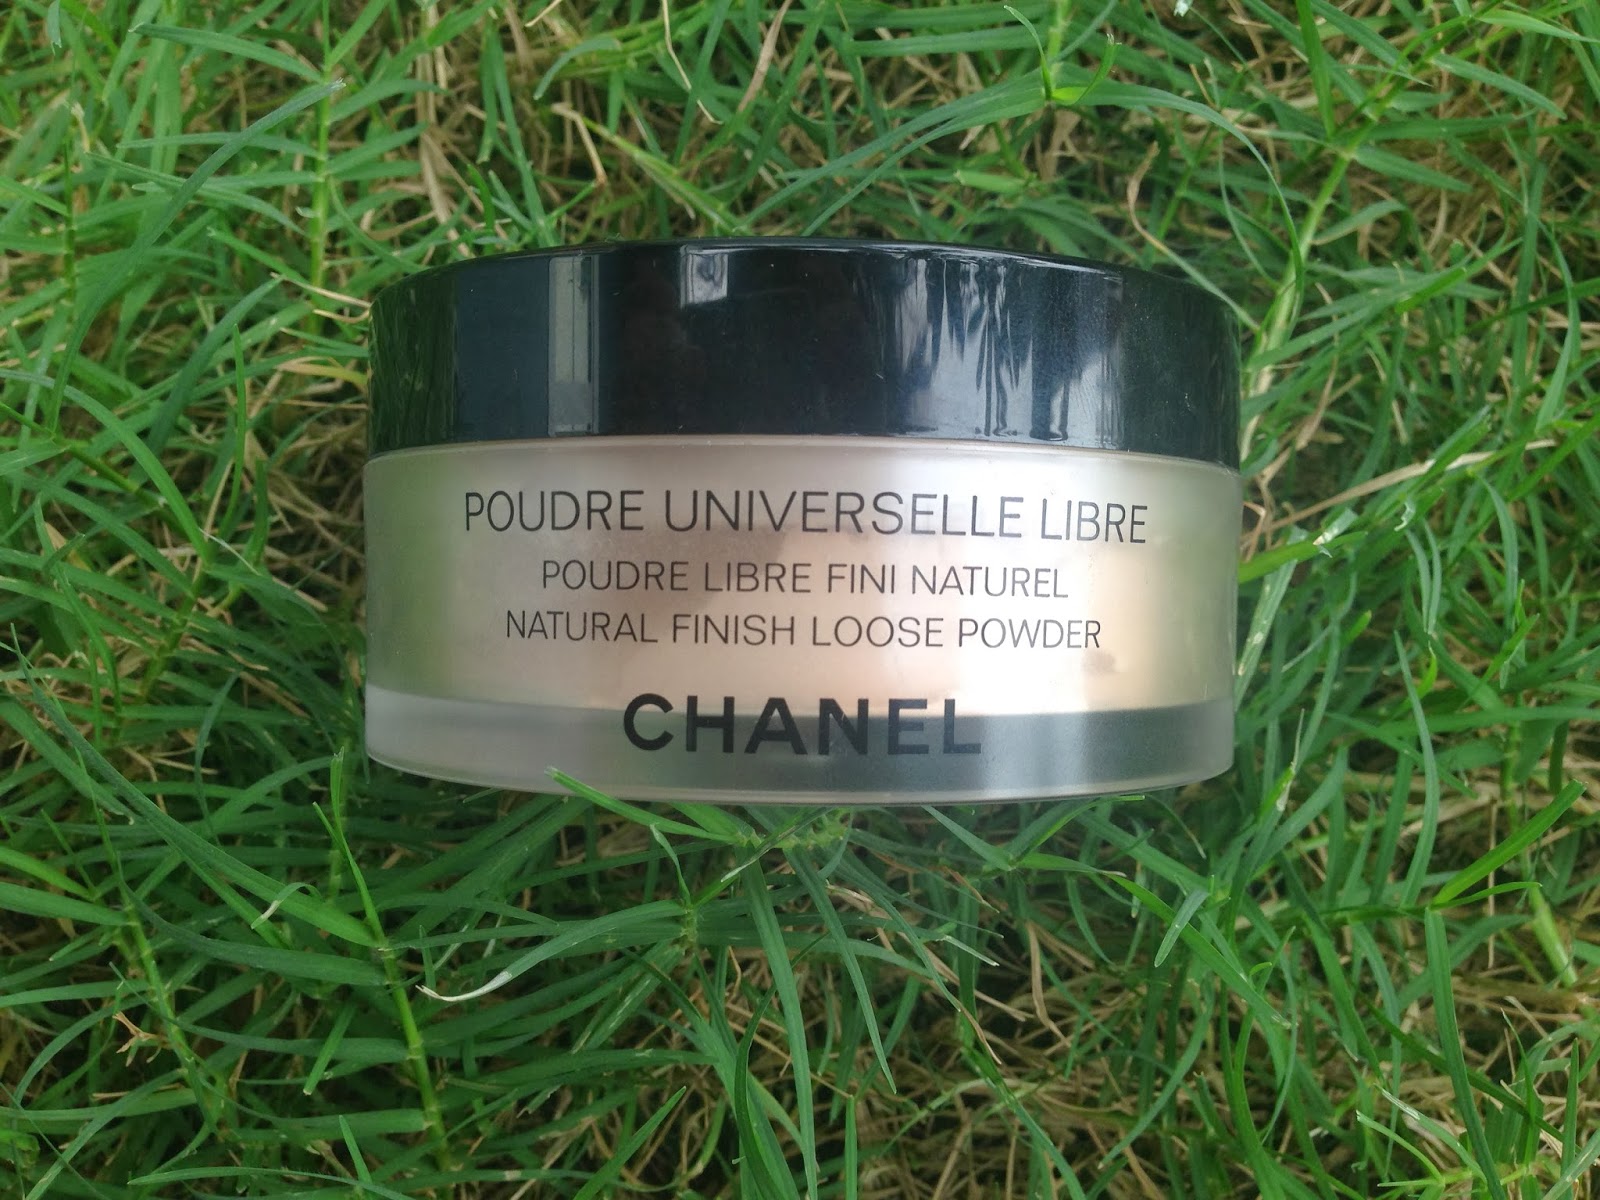 Chanel Reverie Poudre Universelle Libre Natural Finish Loose